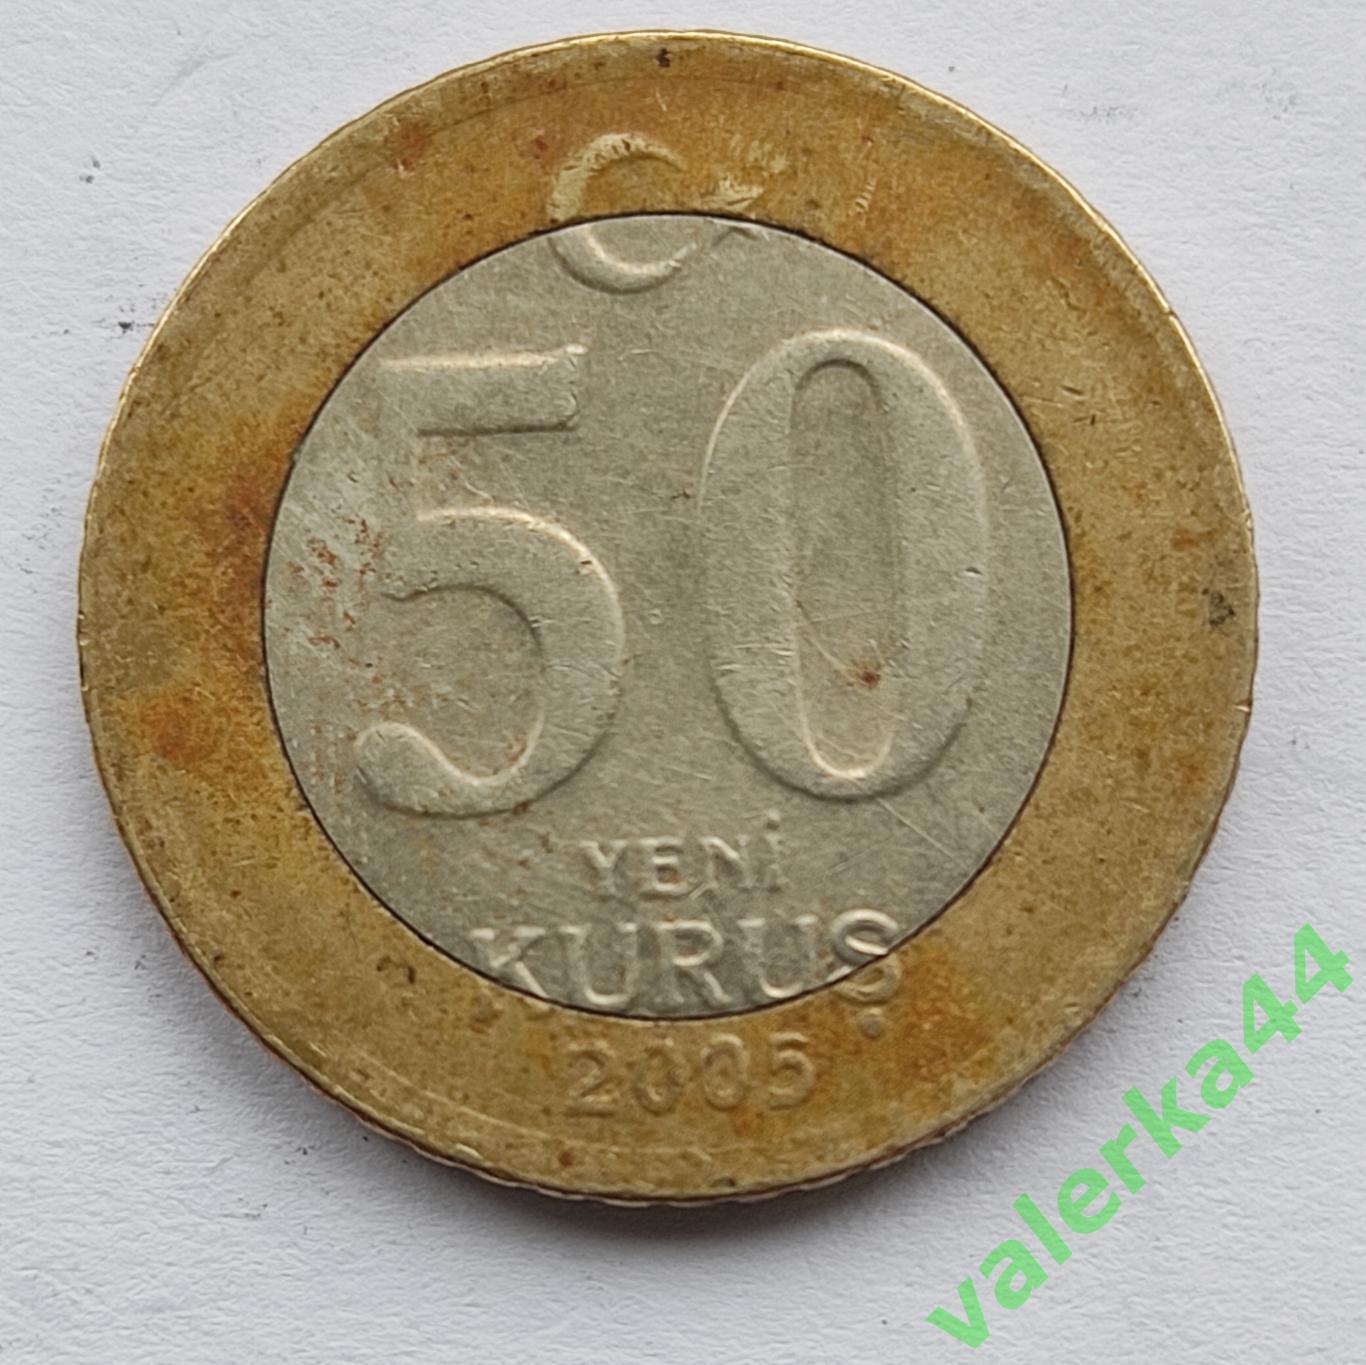 Турция 50 нов куруш 2005 1